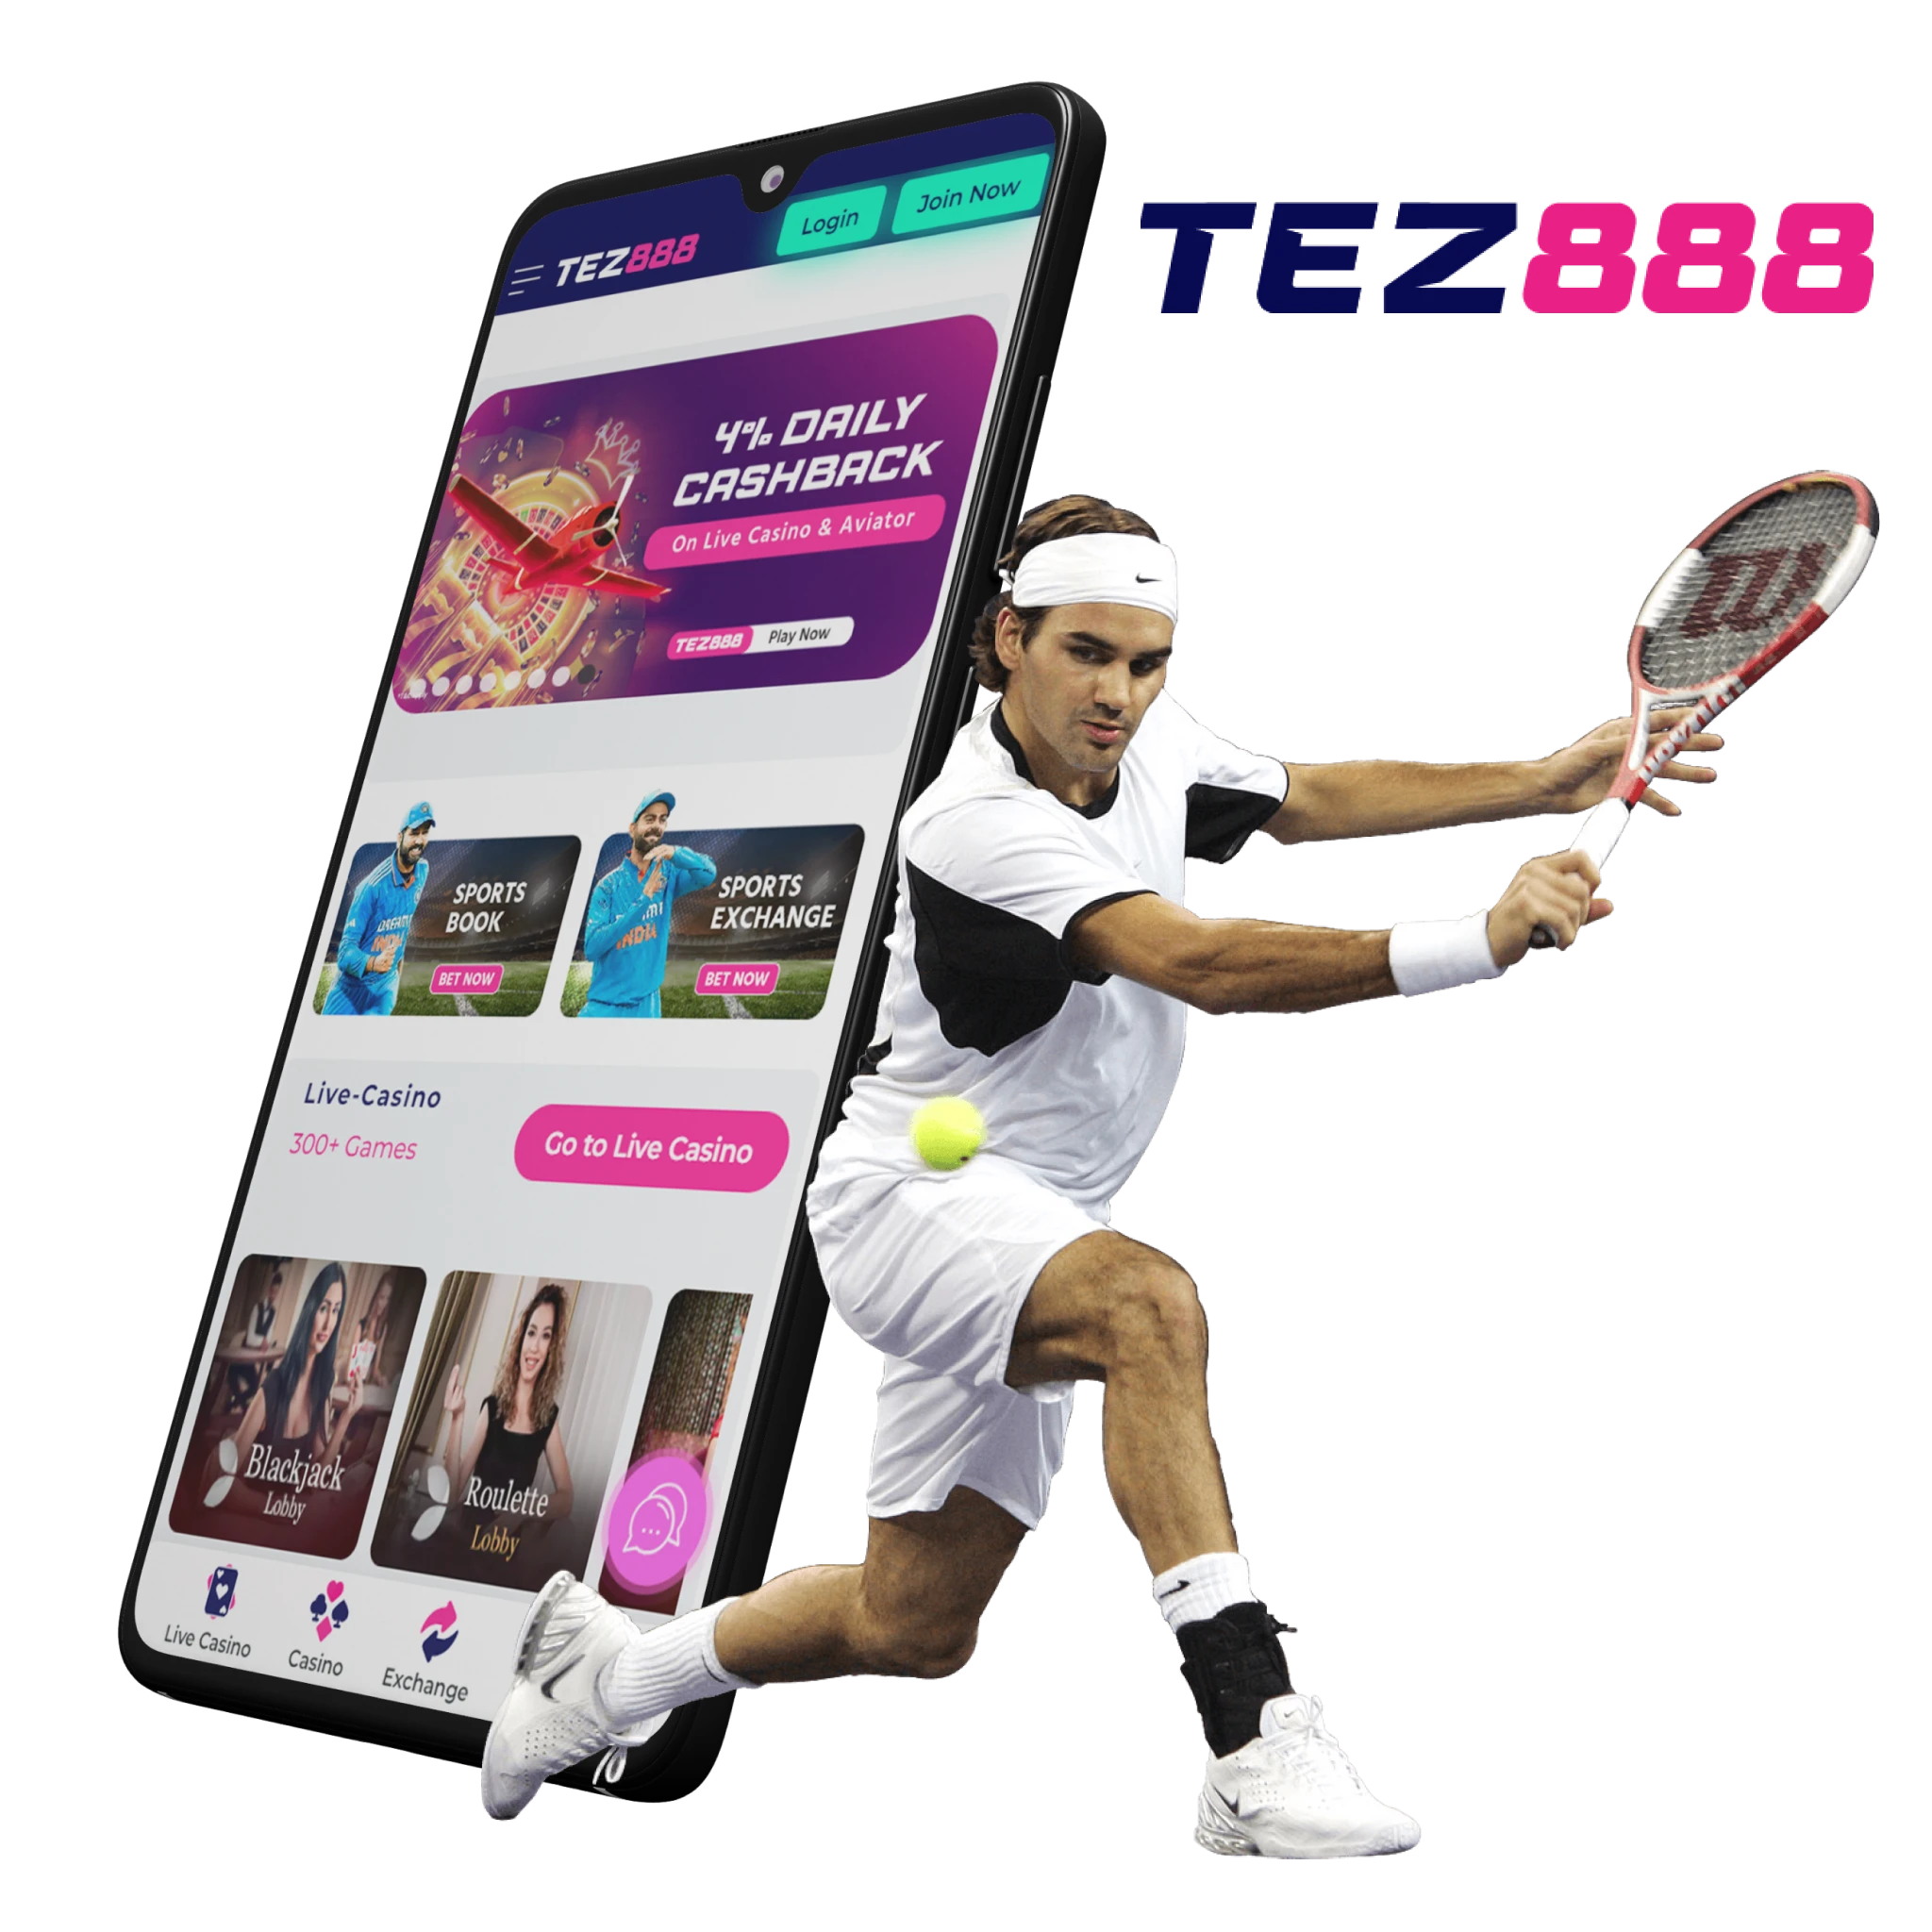 Tez888 app presents a comprehensive platform dedicated to tennis betting.